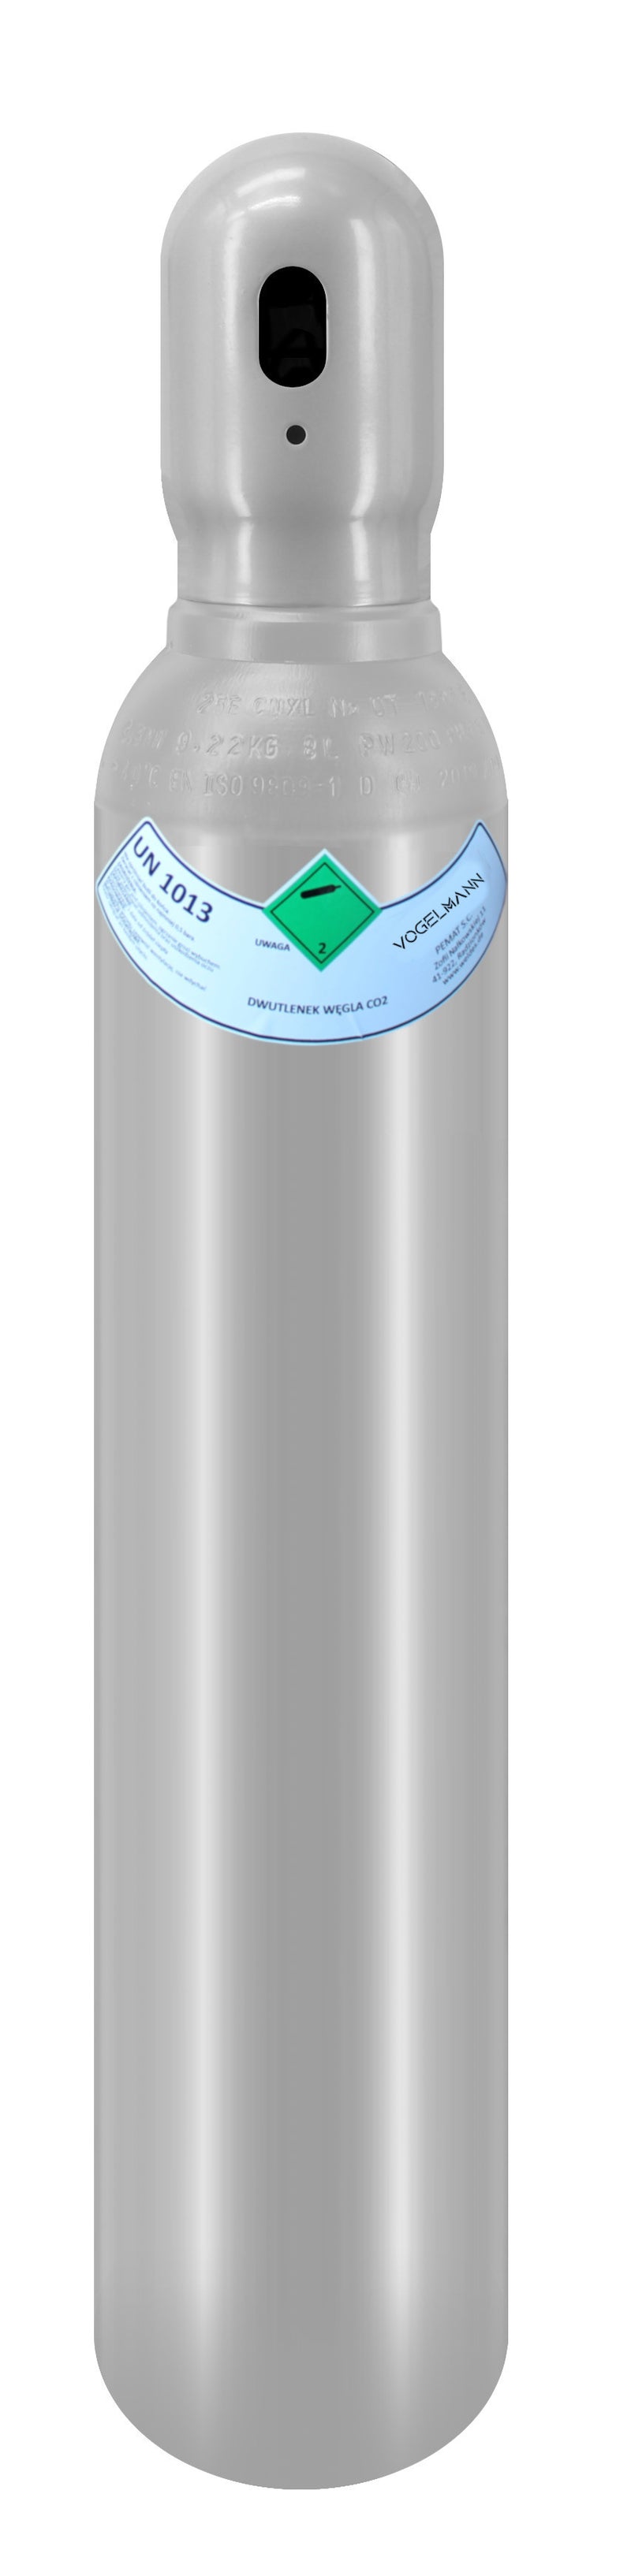 CO2 full gas cylinder 8L 1,5m3 Vogelmann